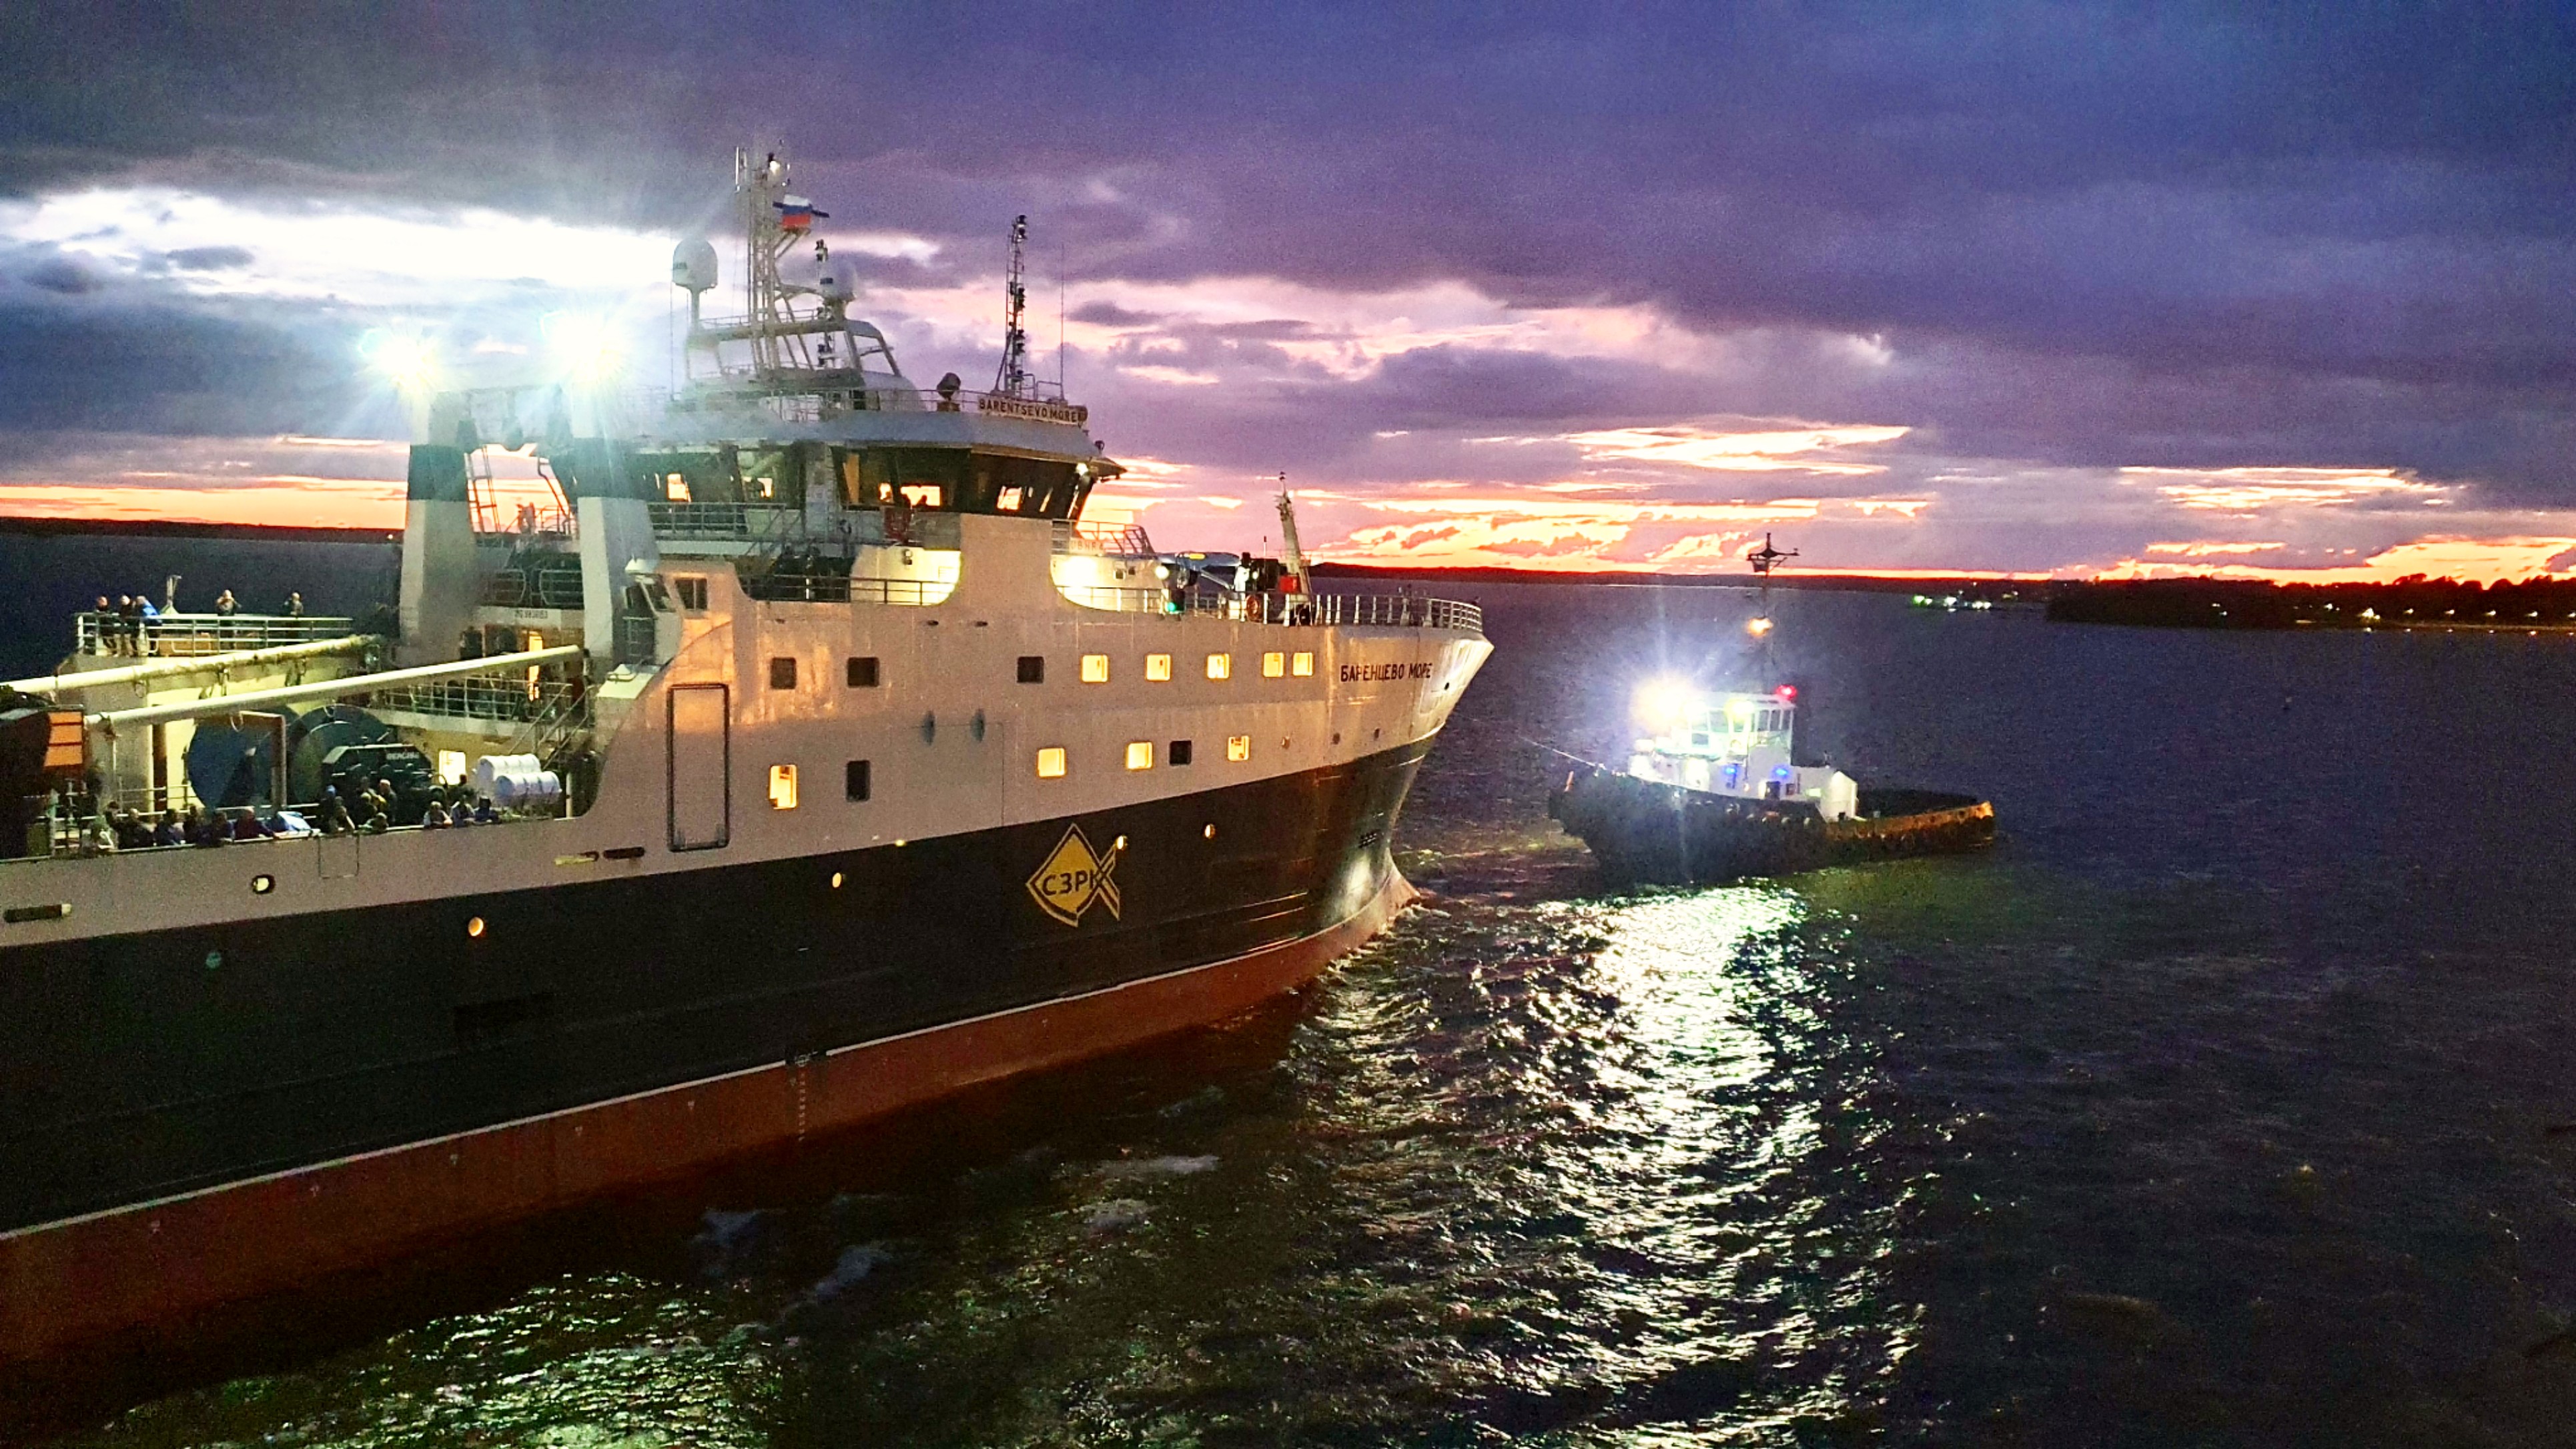 Vyborg Shipyard sends its first trawler of KMT01 design for sea trials